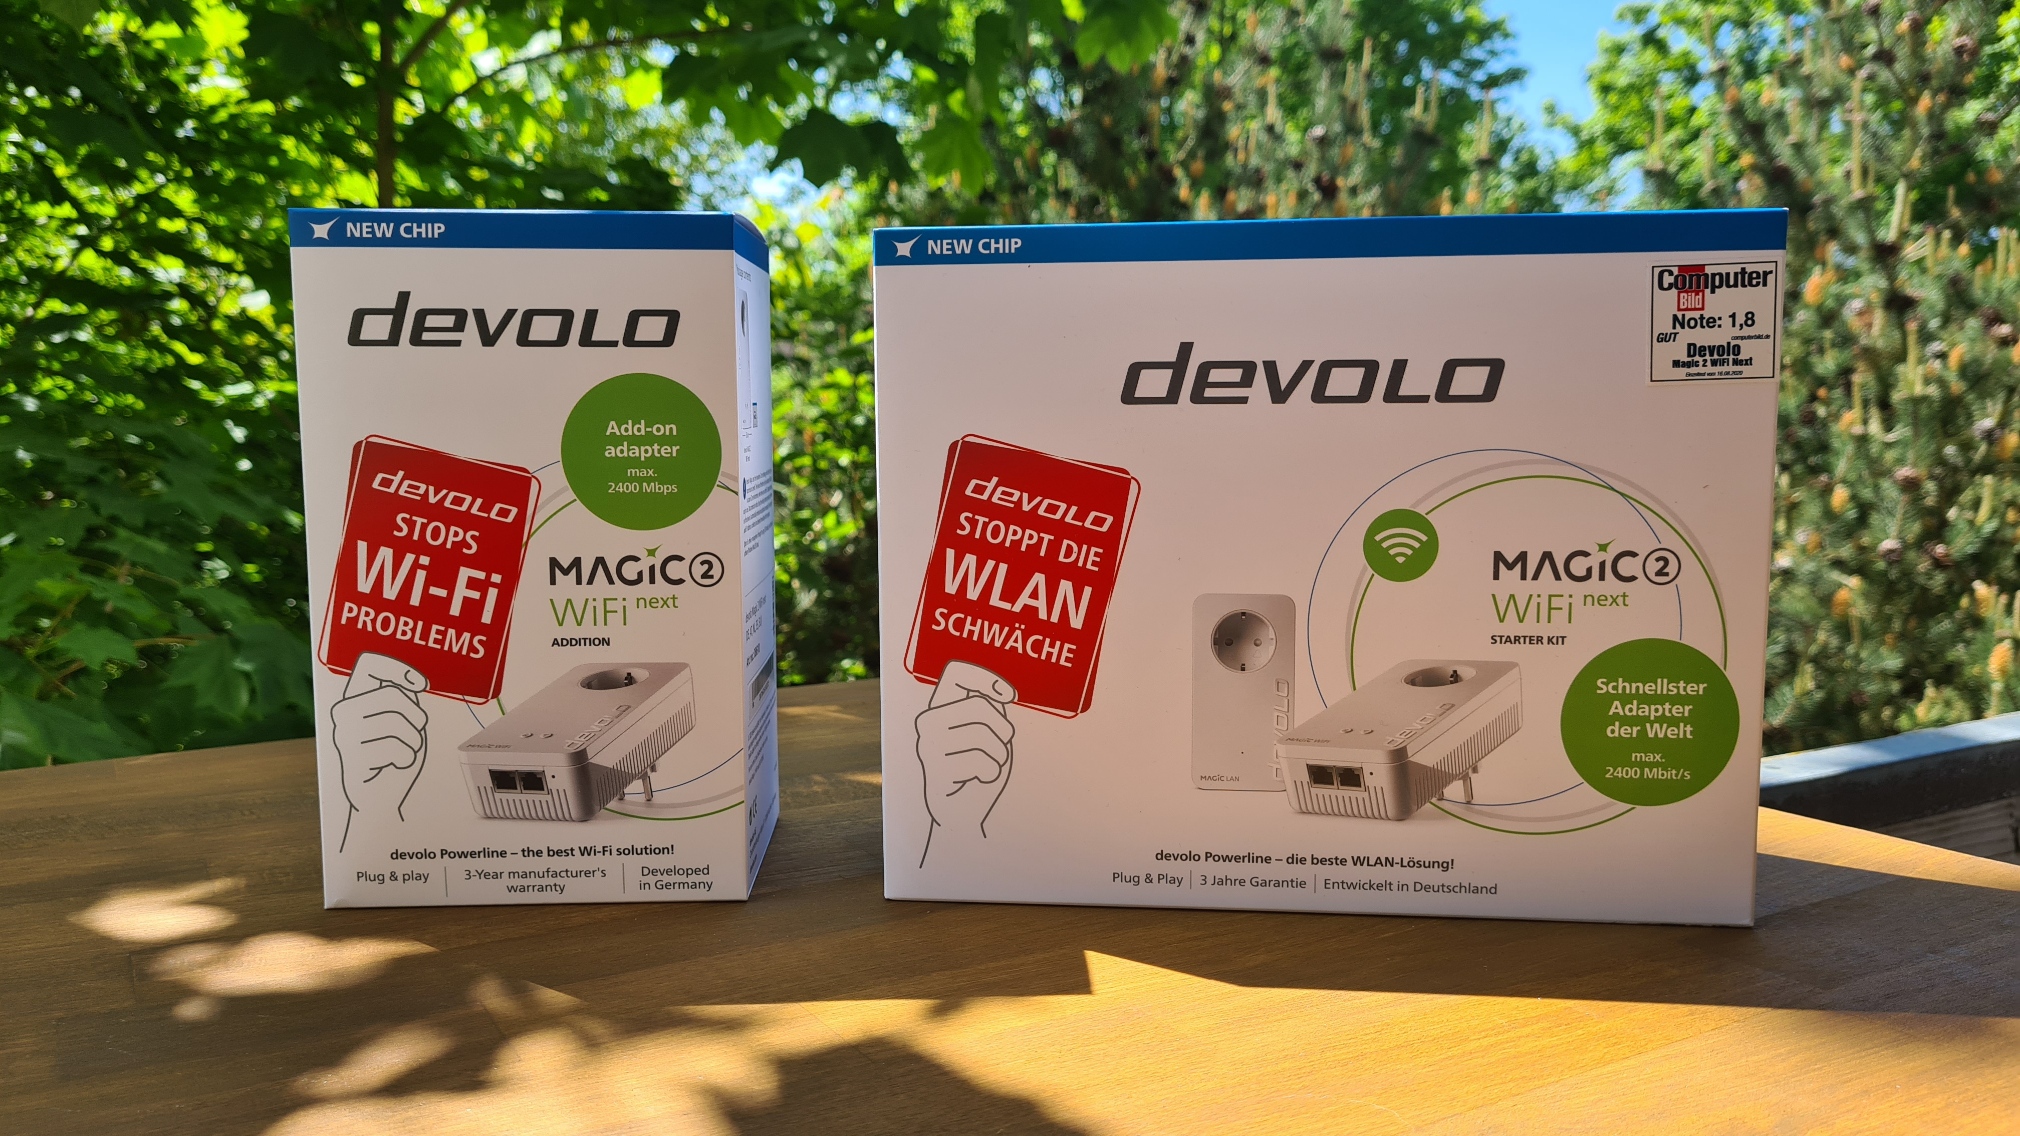 devolo Magic 2 WiFi next Wireless Access Point with an IPQ4018 Wi-Fi SoC